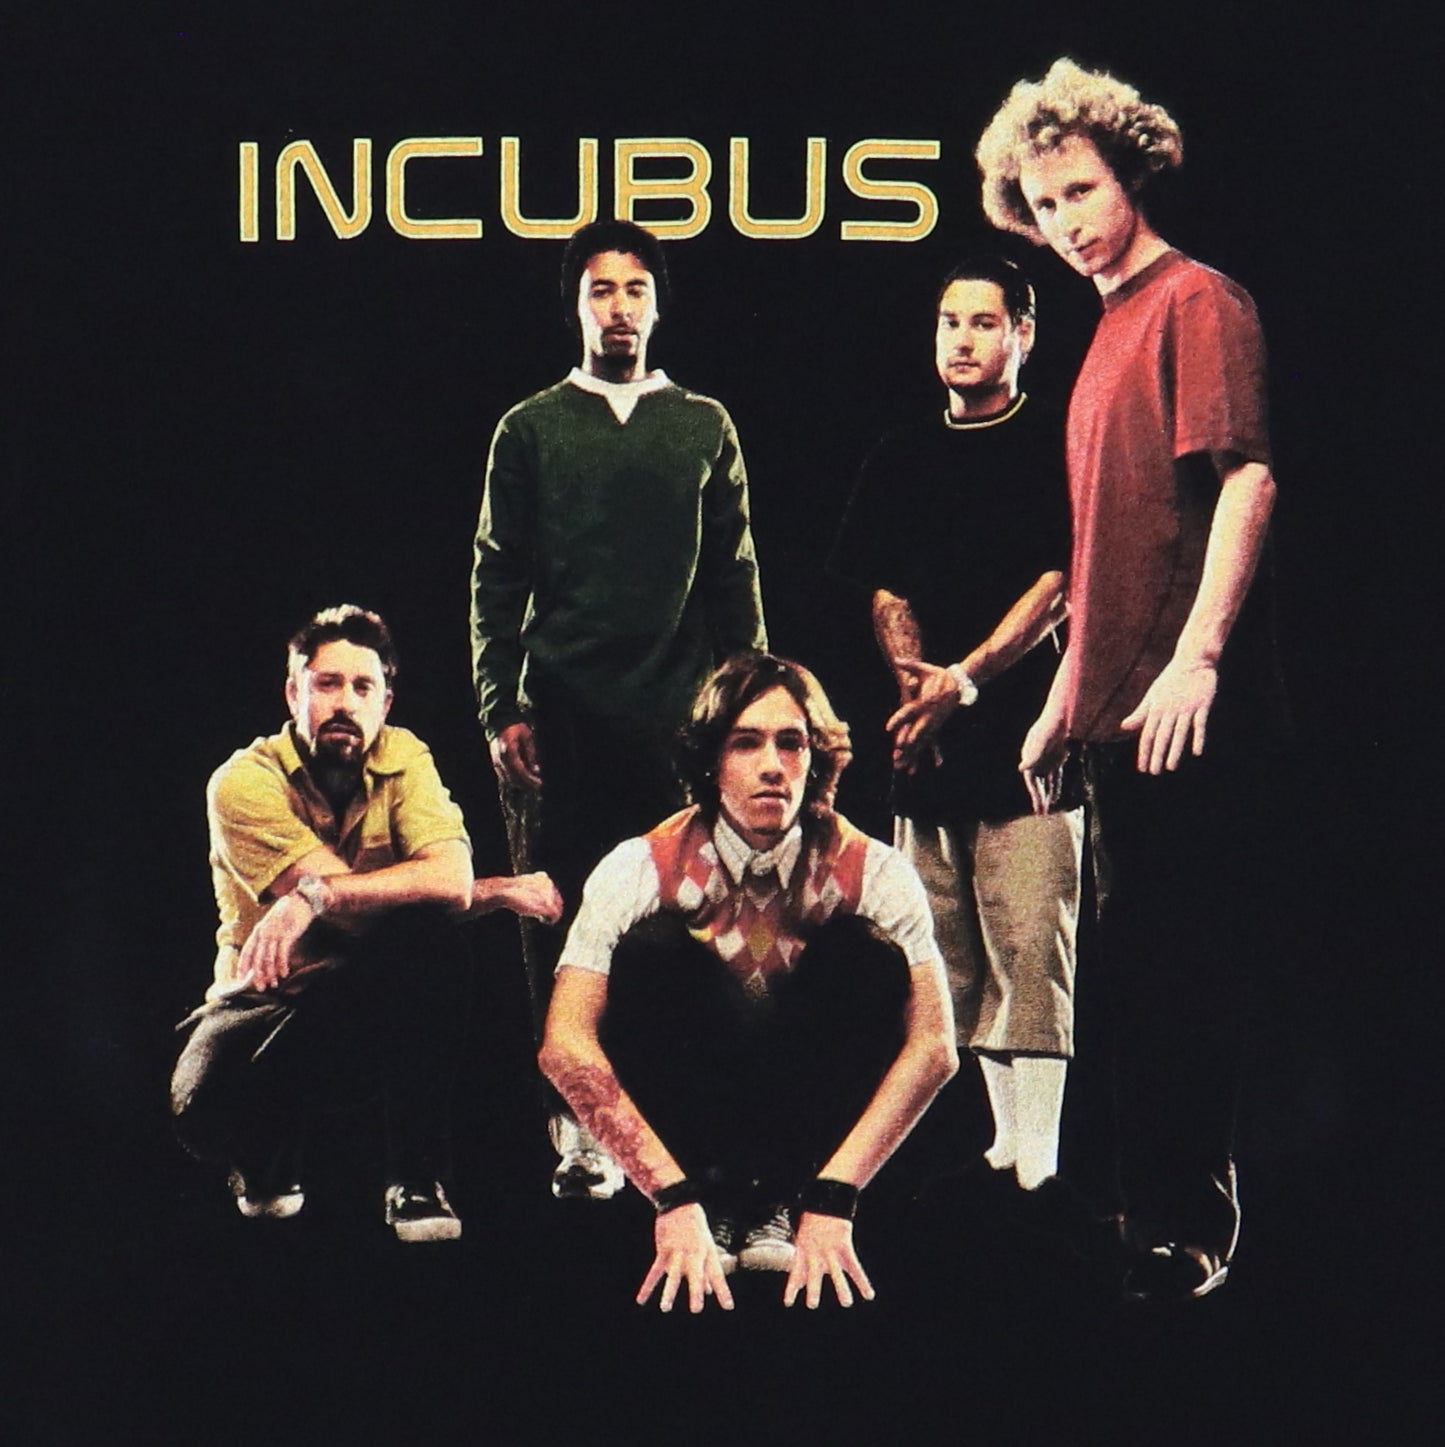 2002 Incubus Morning View Tour Shirt